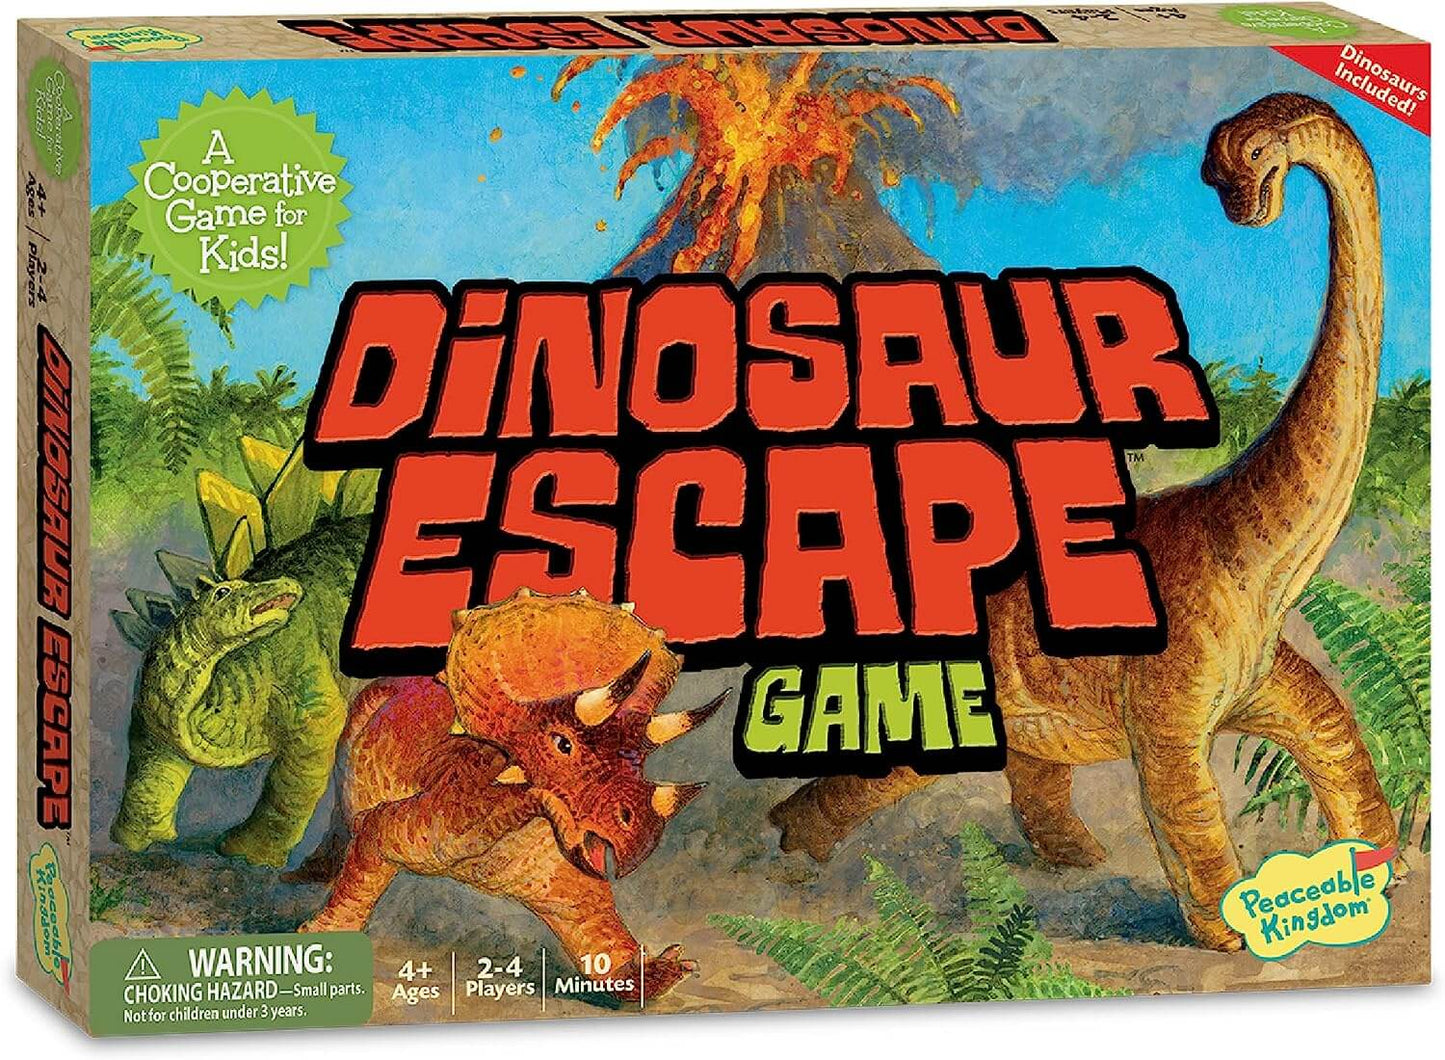 Dinosaur Escape Award Winning Cooperative